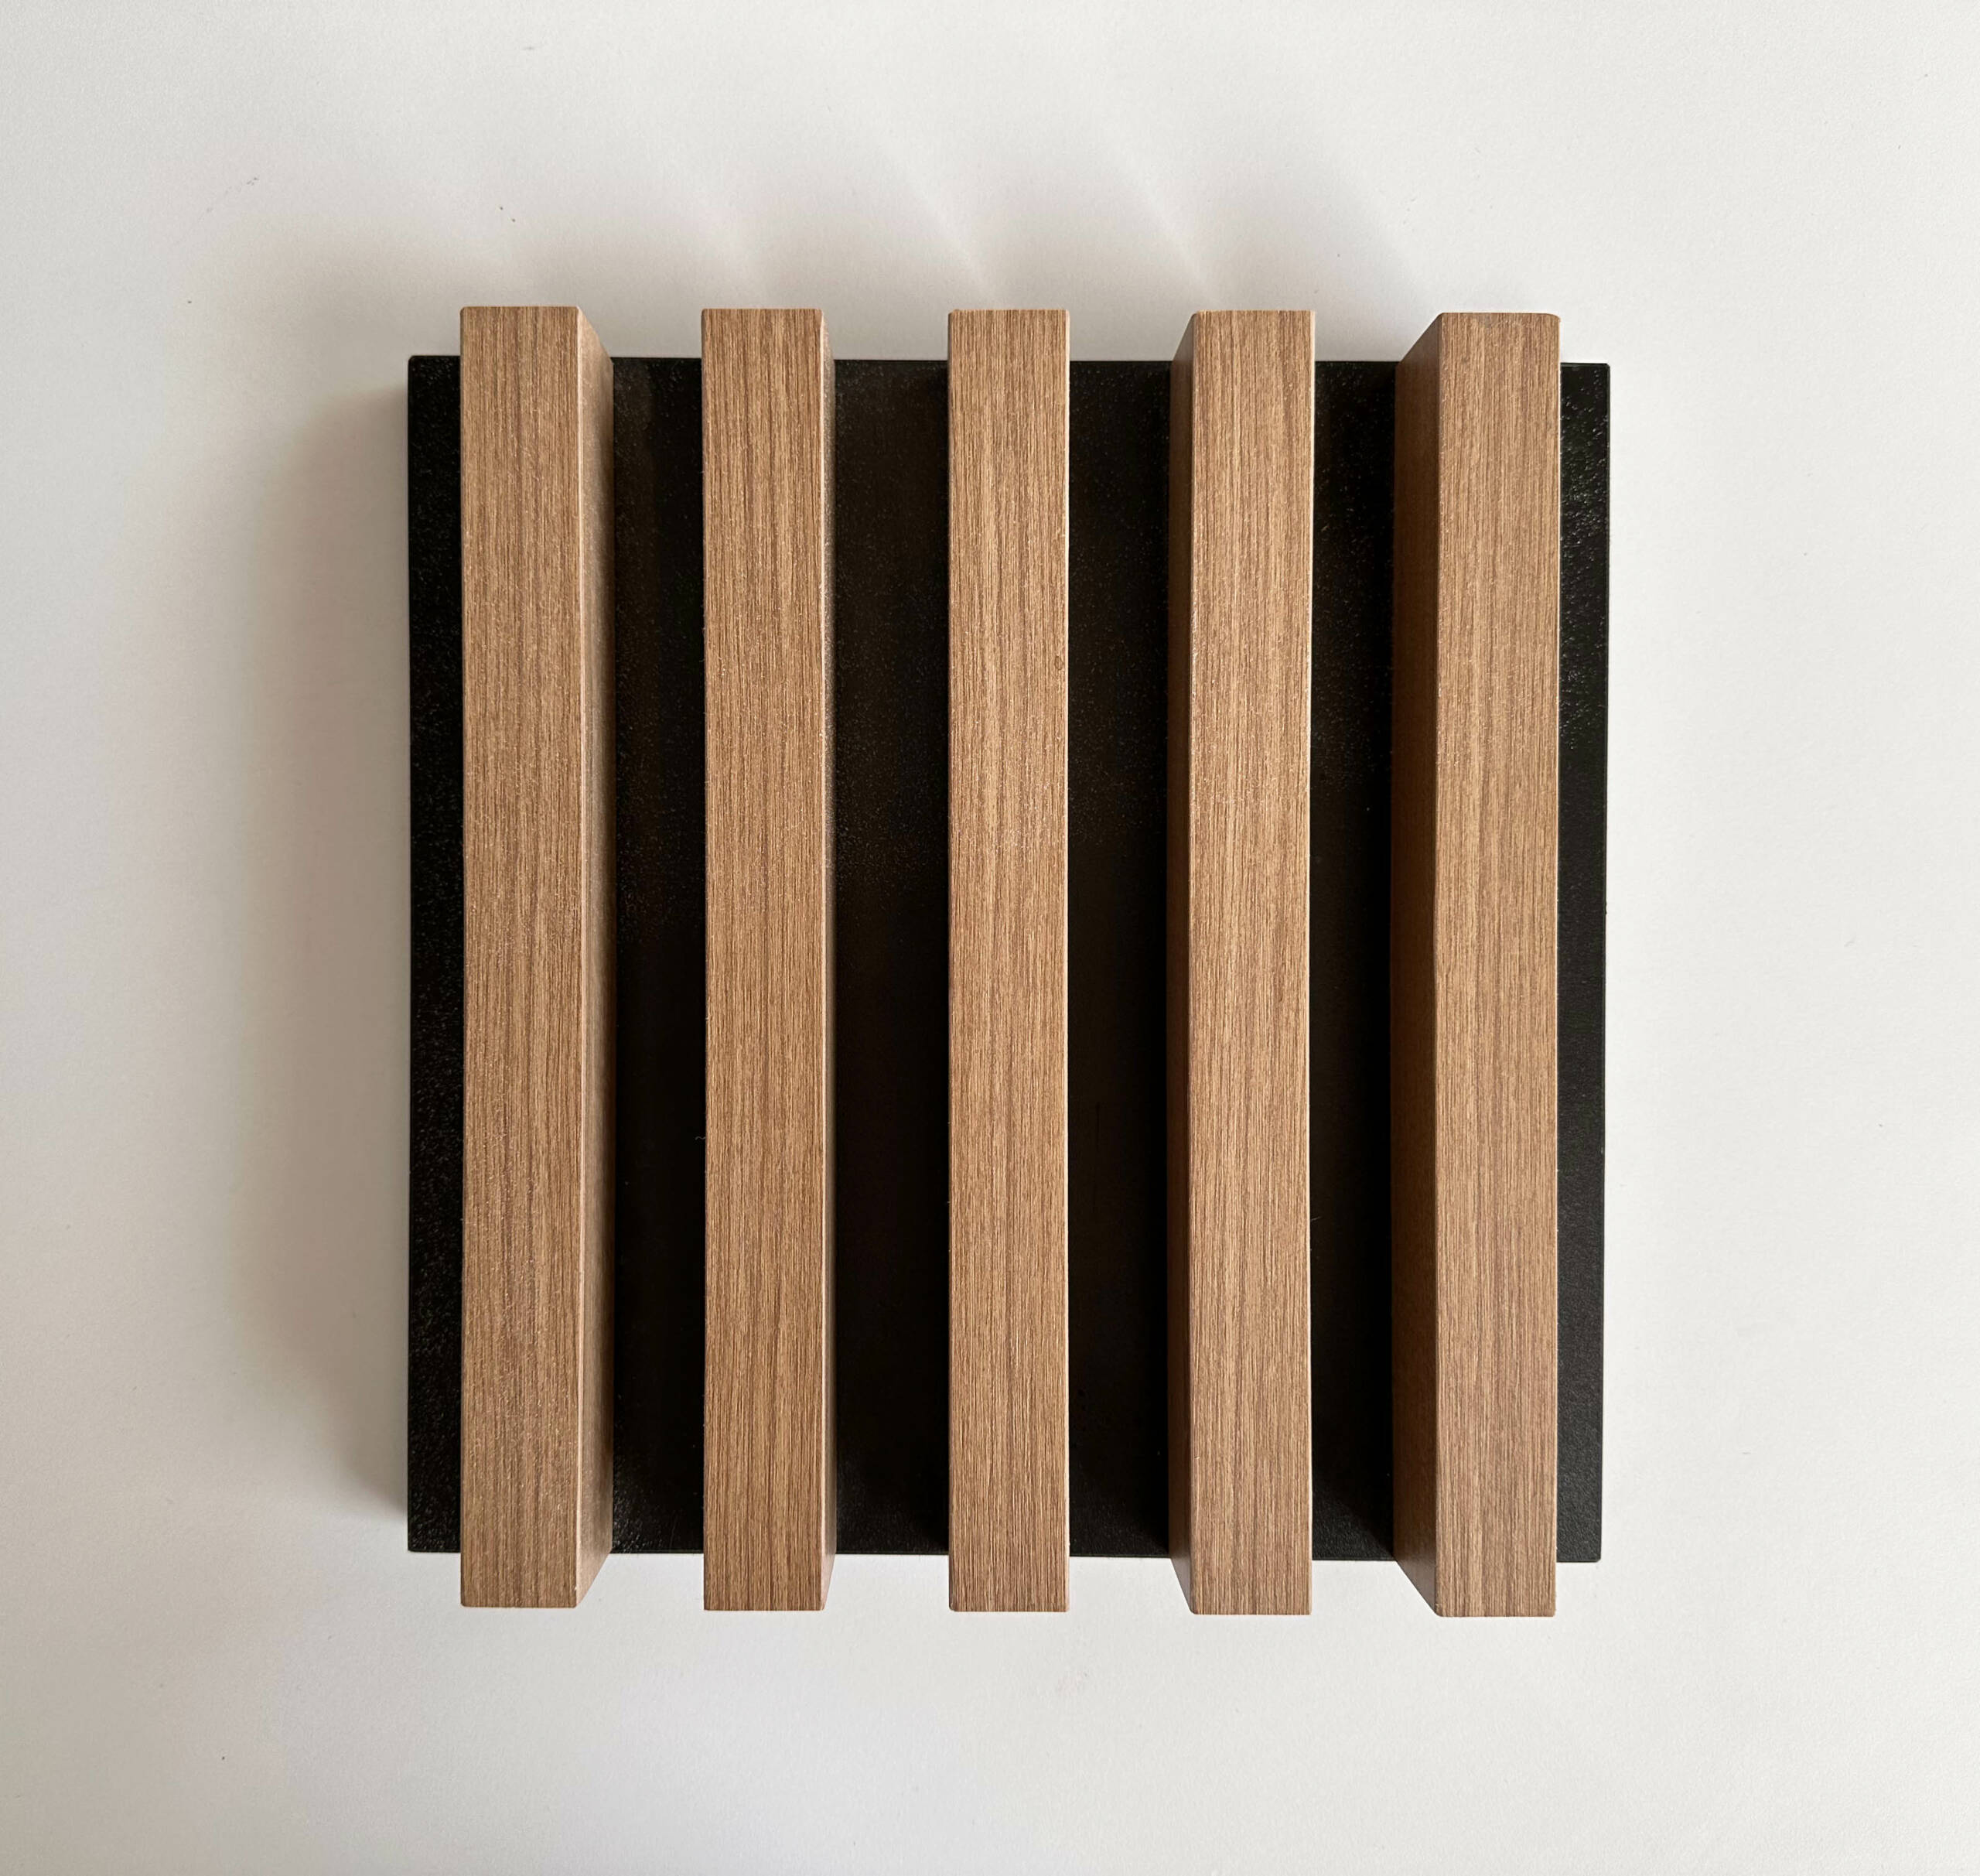 Revestir paredes con palillería de madera - Blog